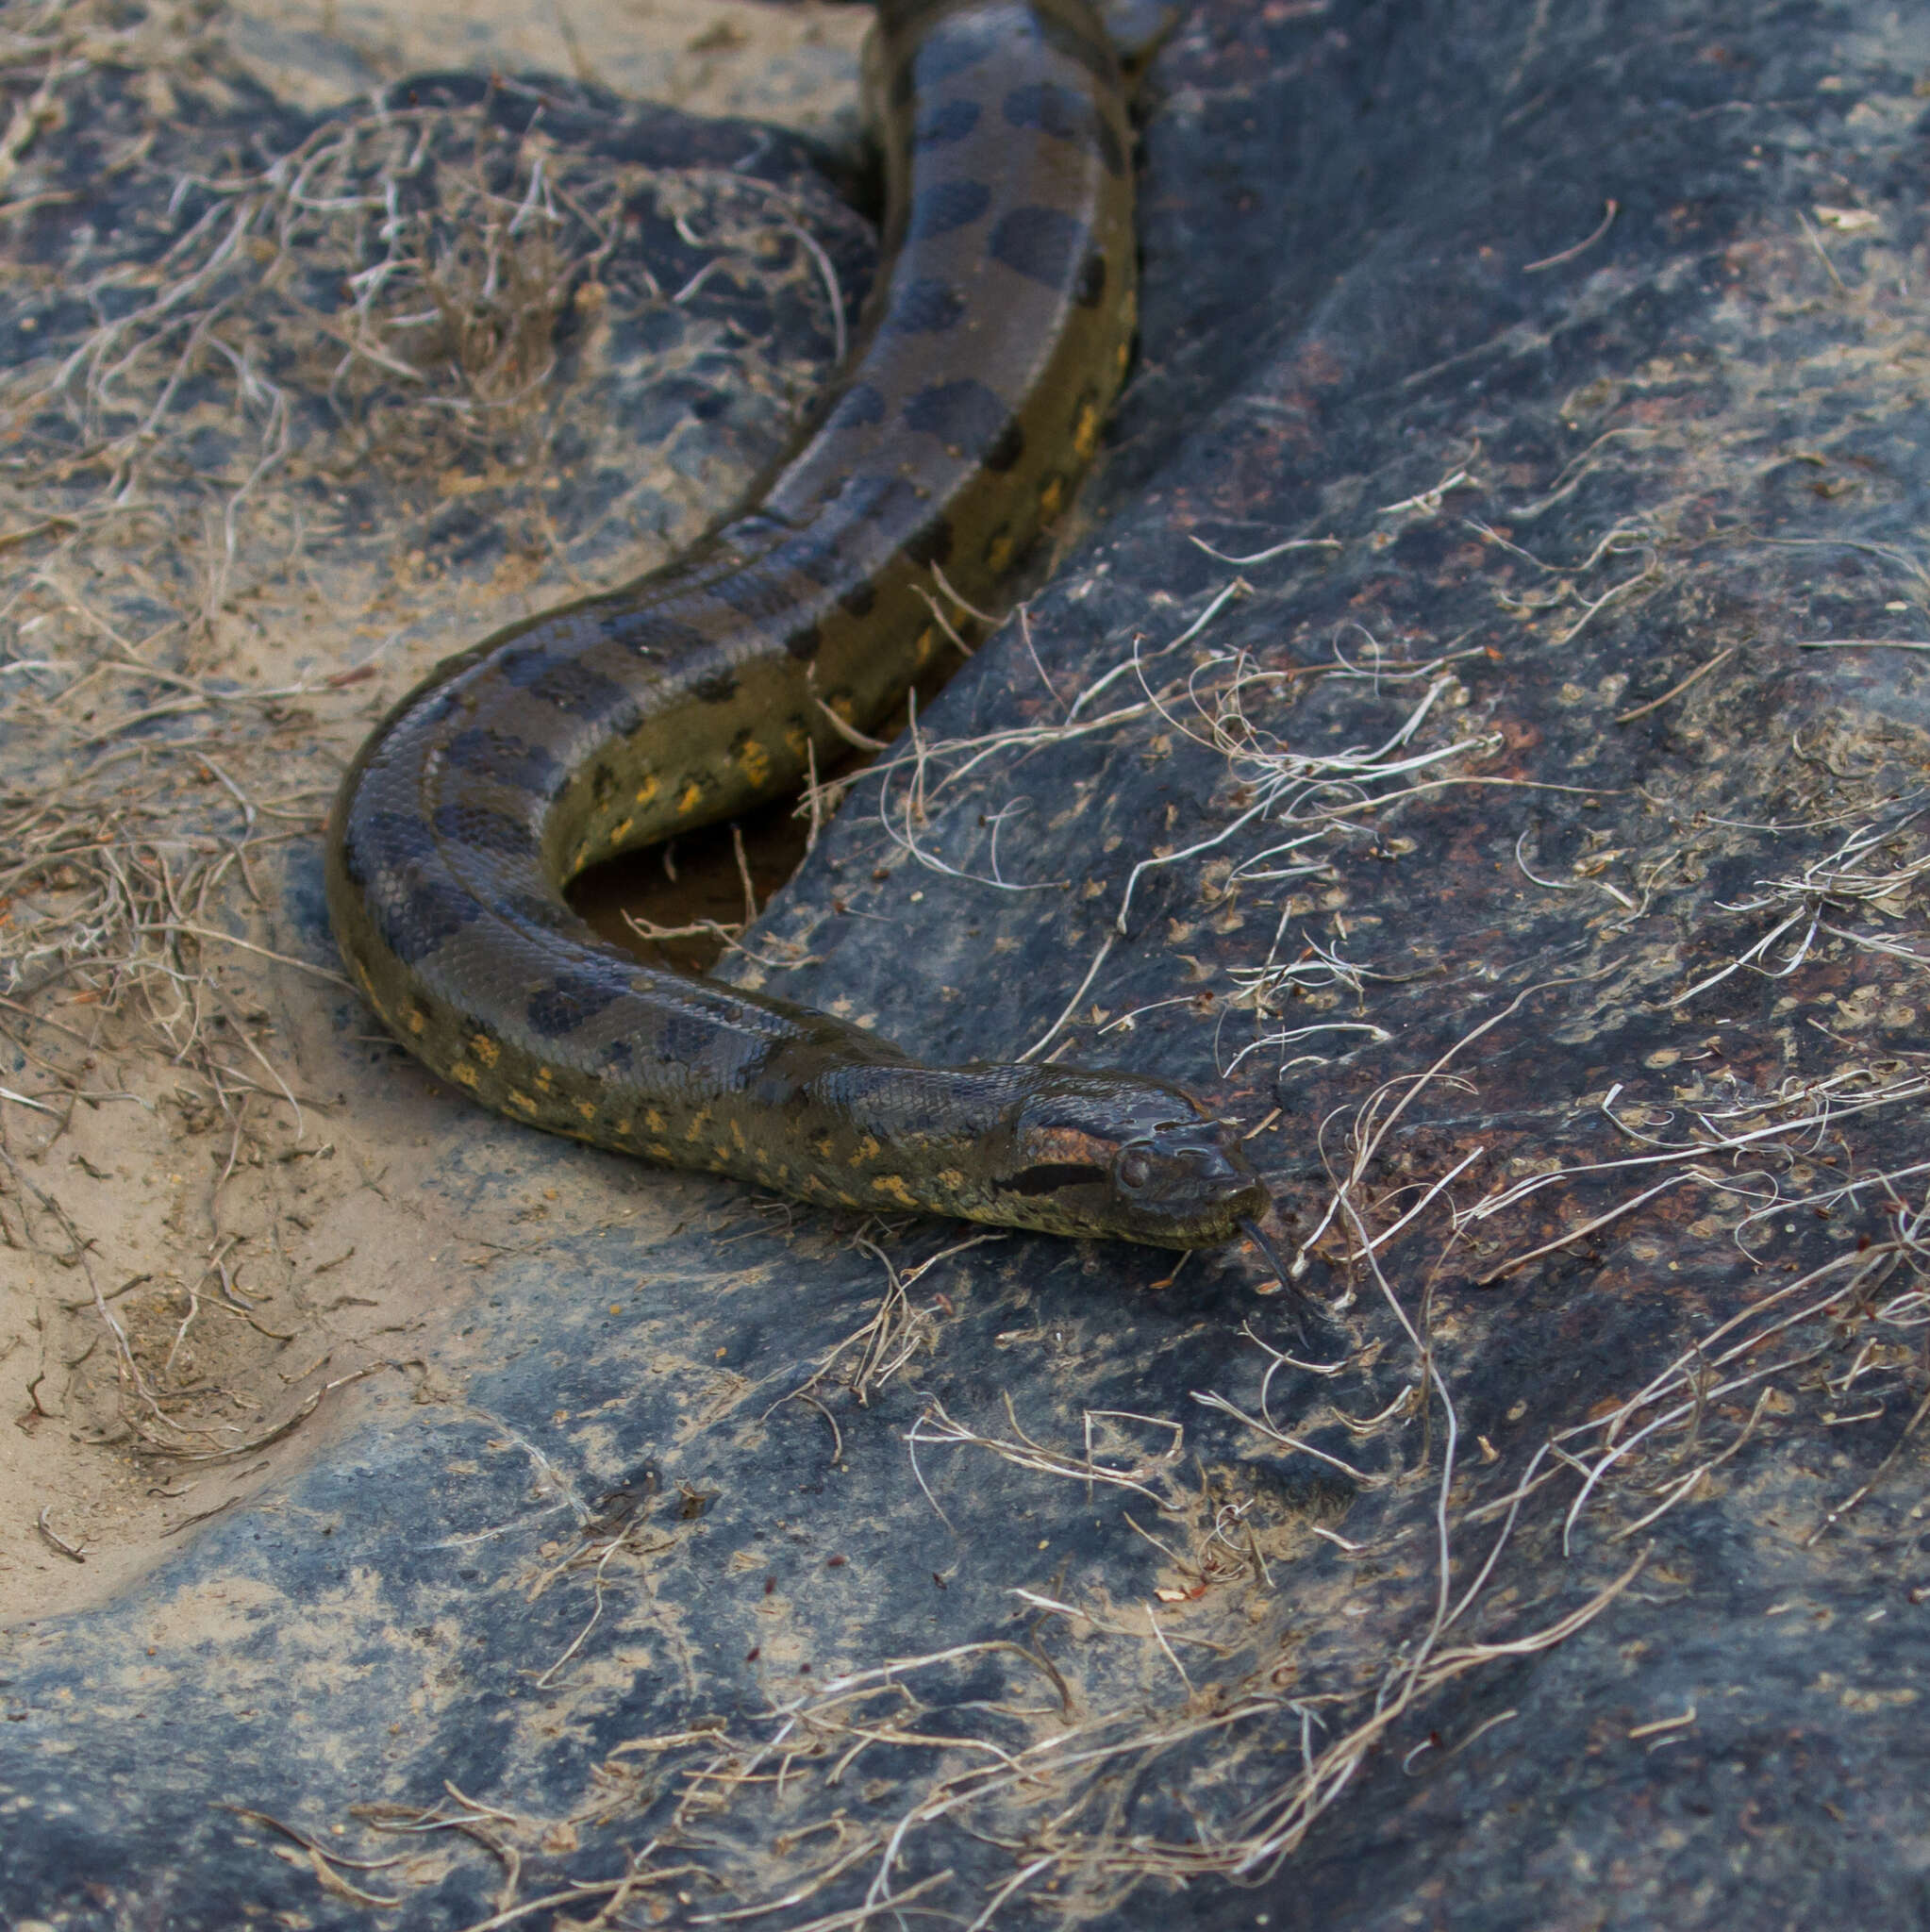 Image of Green anaconda